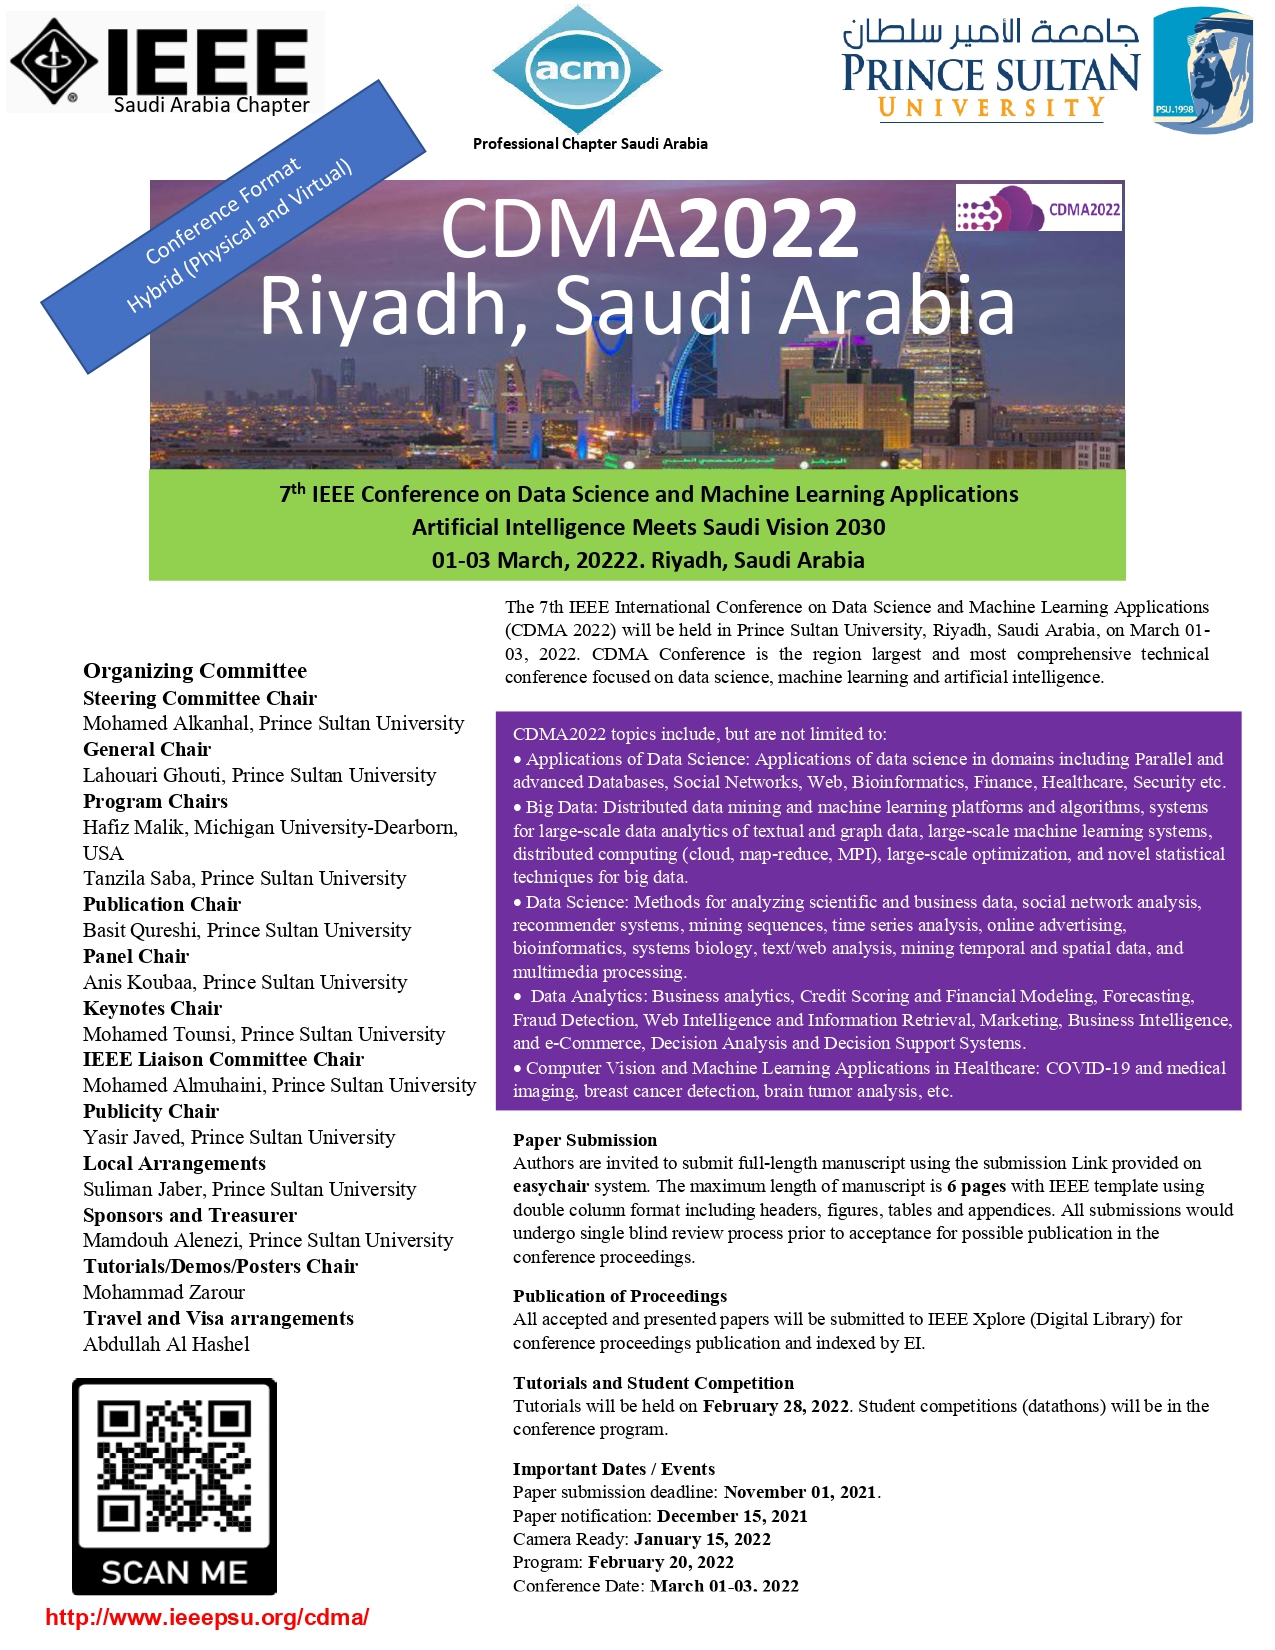 CDMA 2022 Dates announced